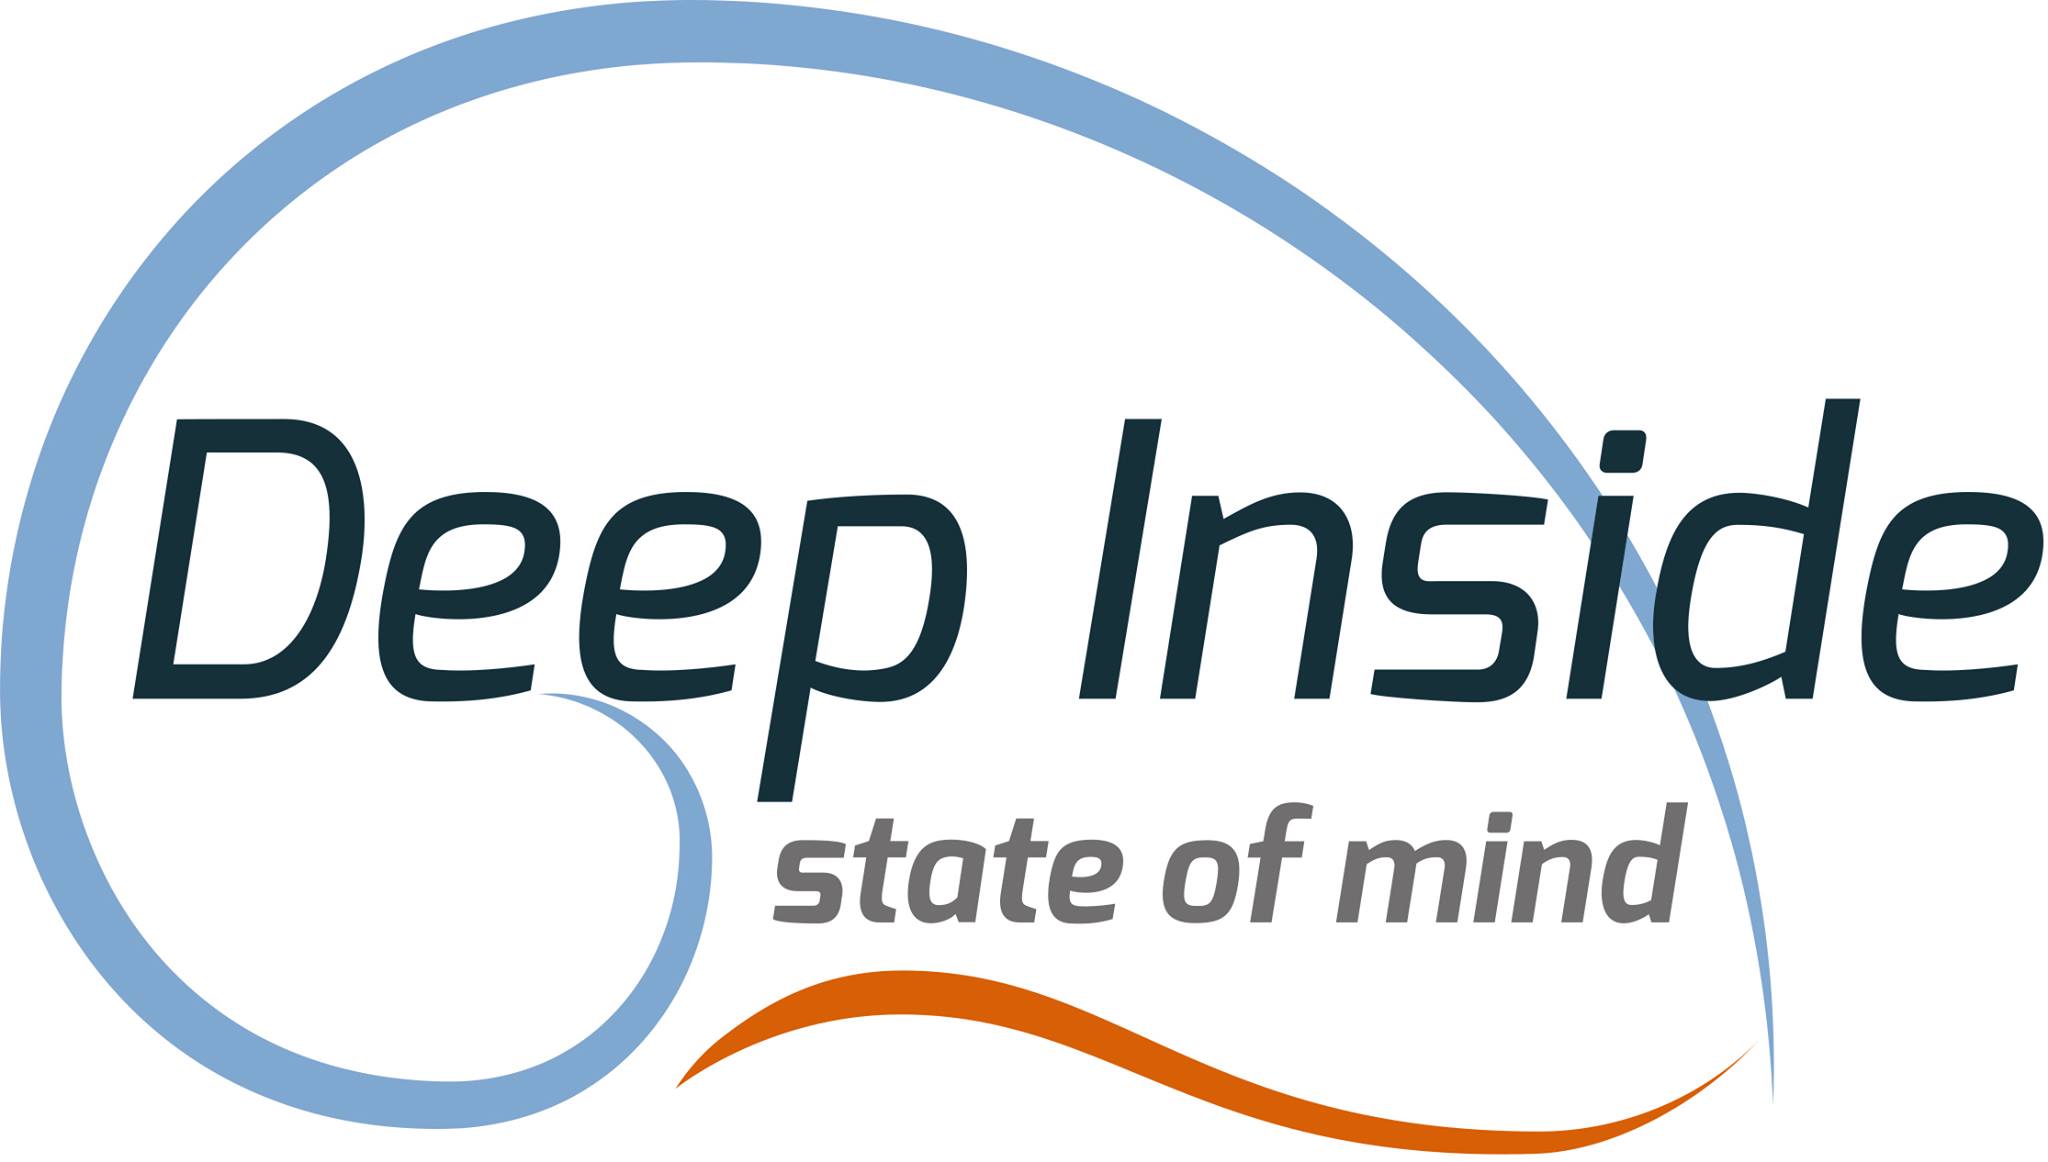 deep_inside_logo